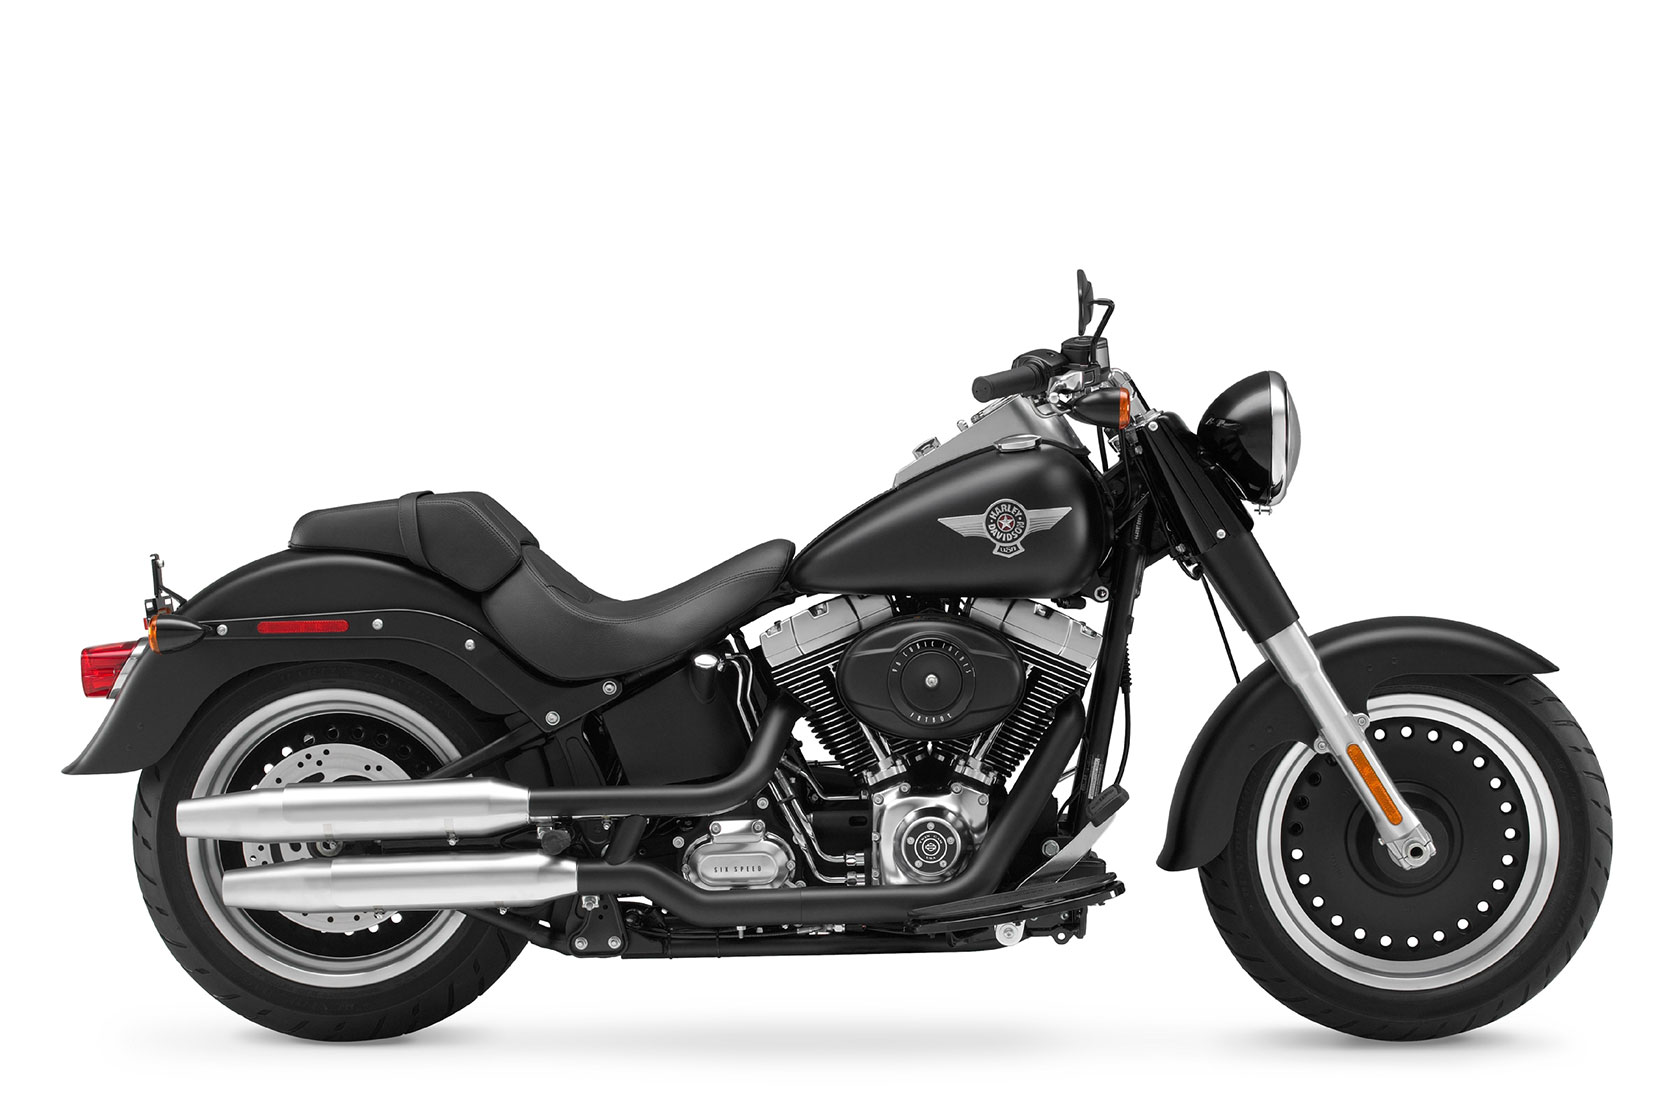 2010 Harley-Davidson Motorcycle Models